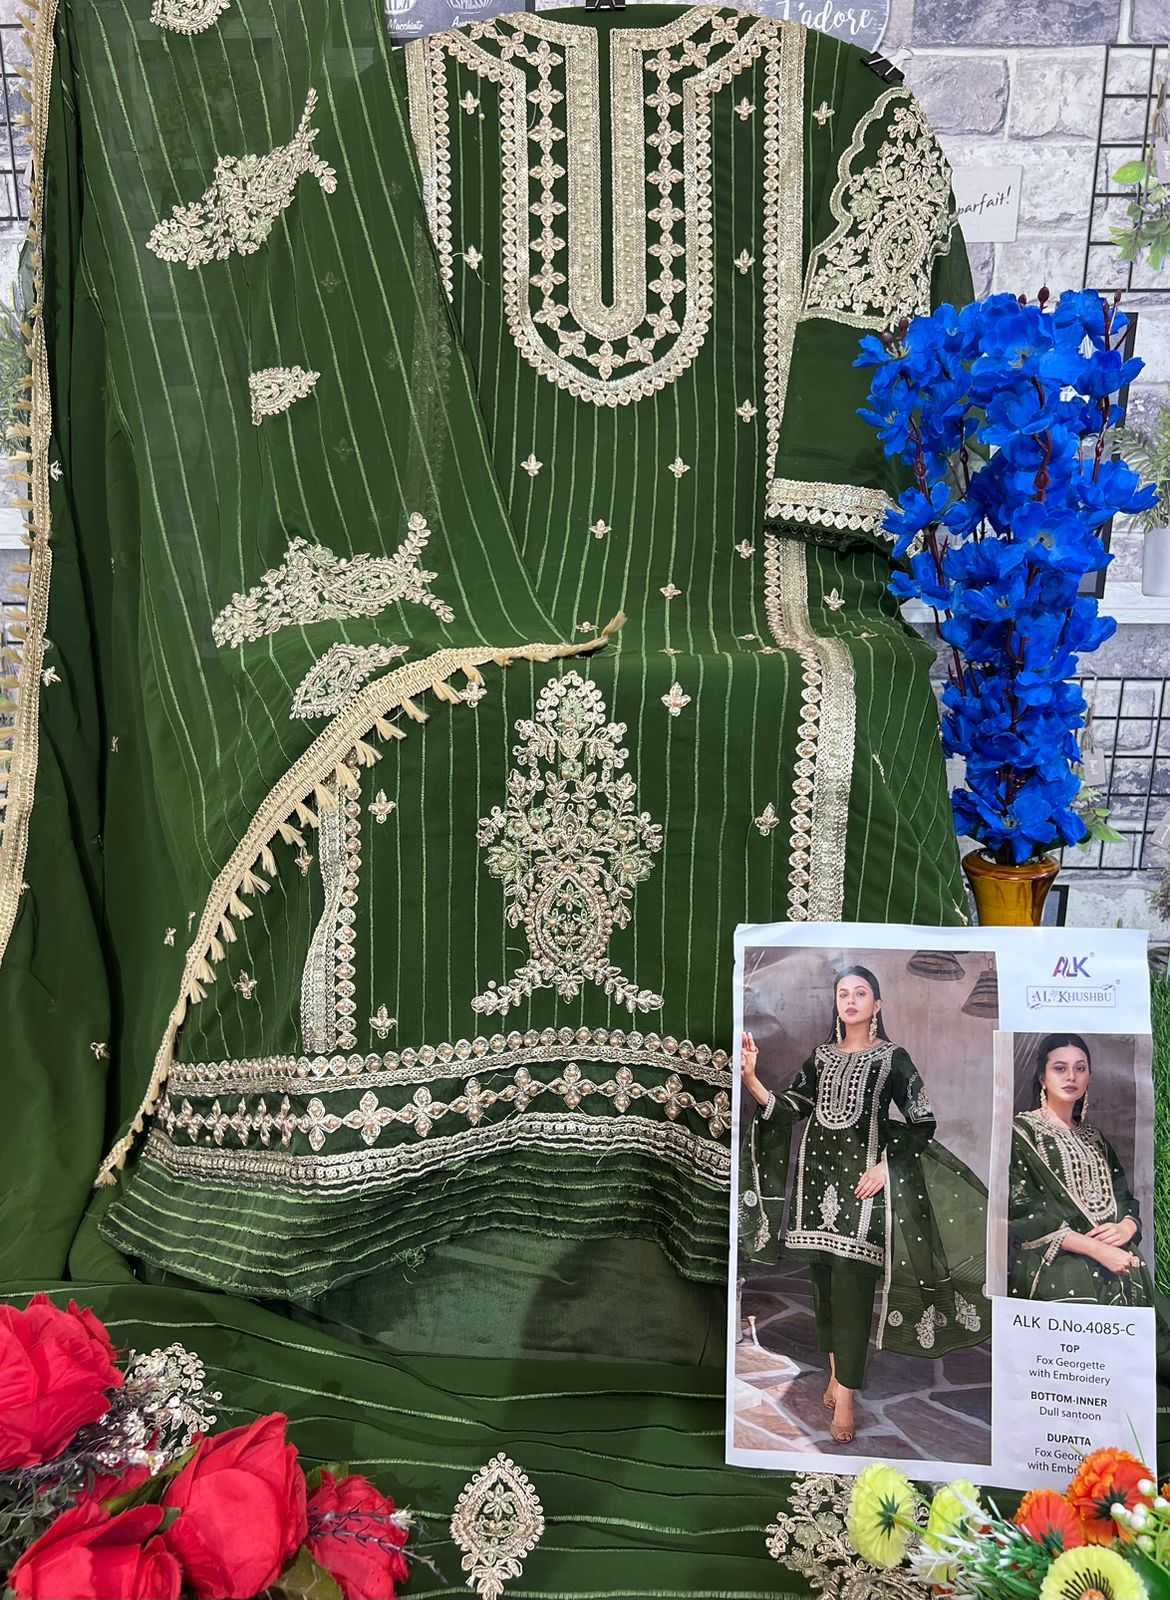 Al Khushbu Elaf D.No 4085 Georgette With Embroidery Work Pakistani Salwar Kameez Buy Online